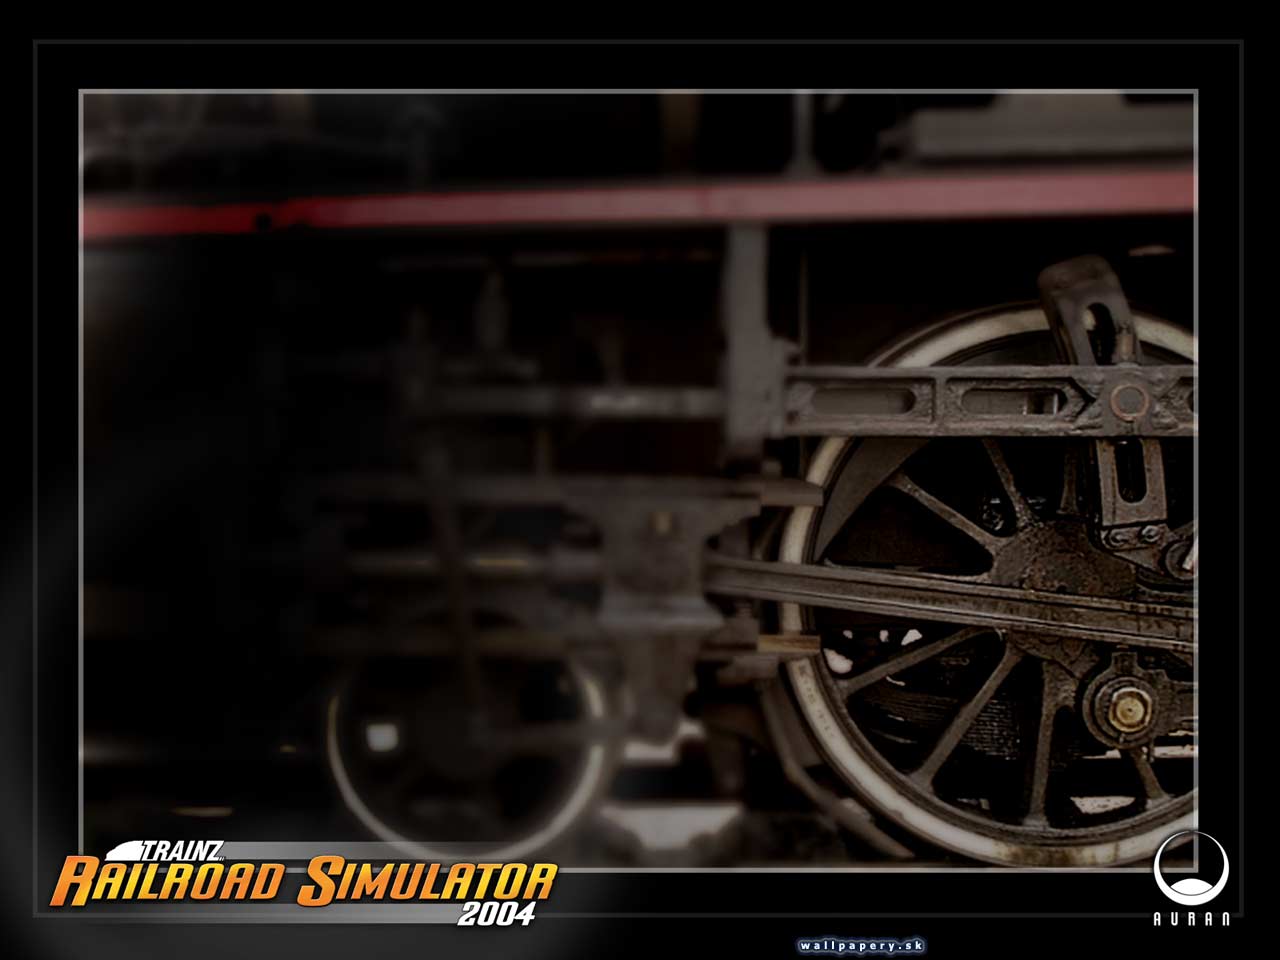 Trainz Railroad Simulator 2004 - wallpaper 9